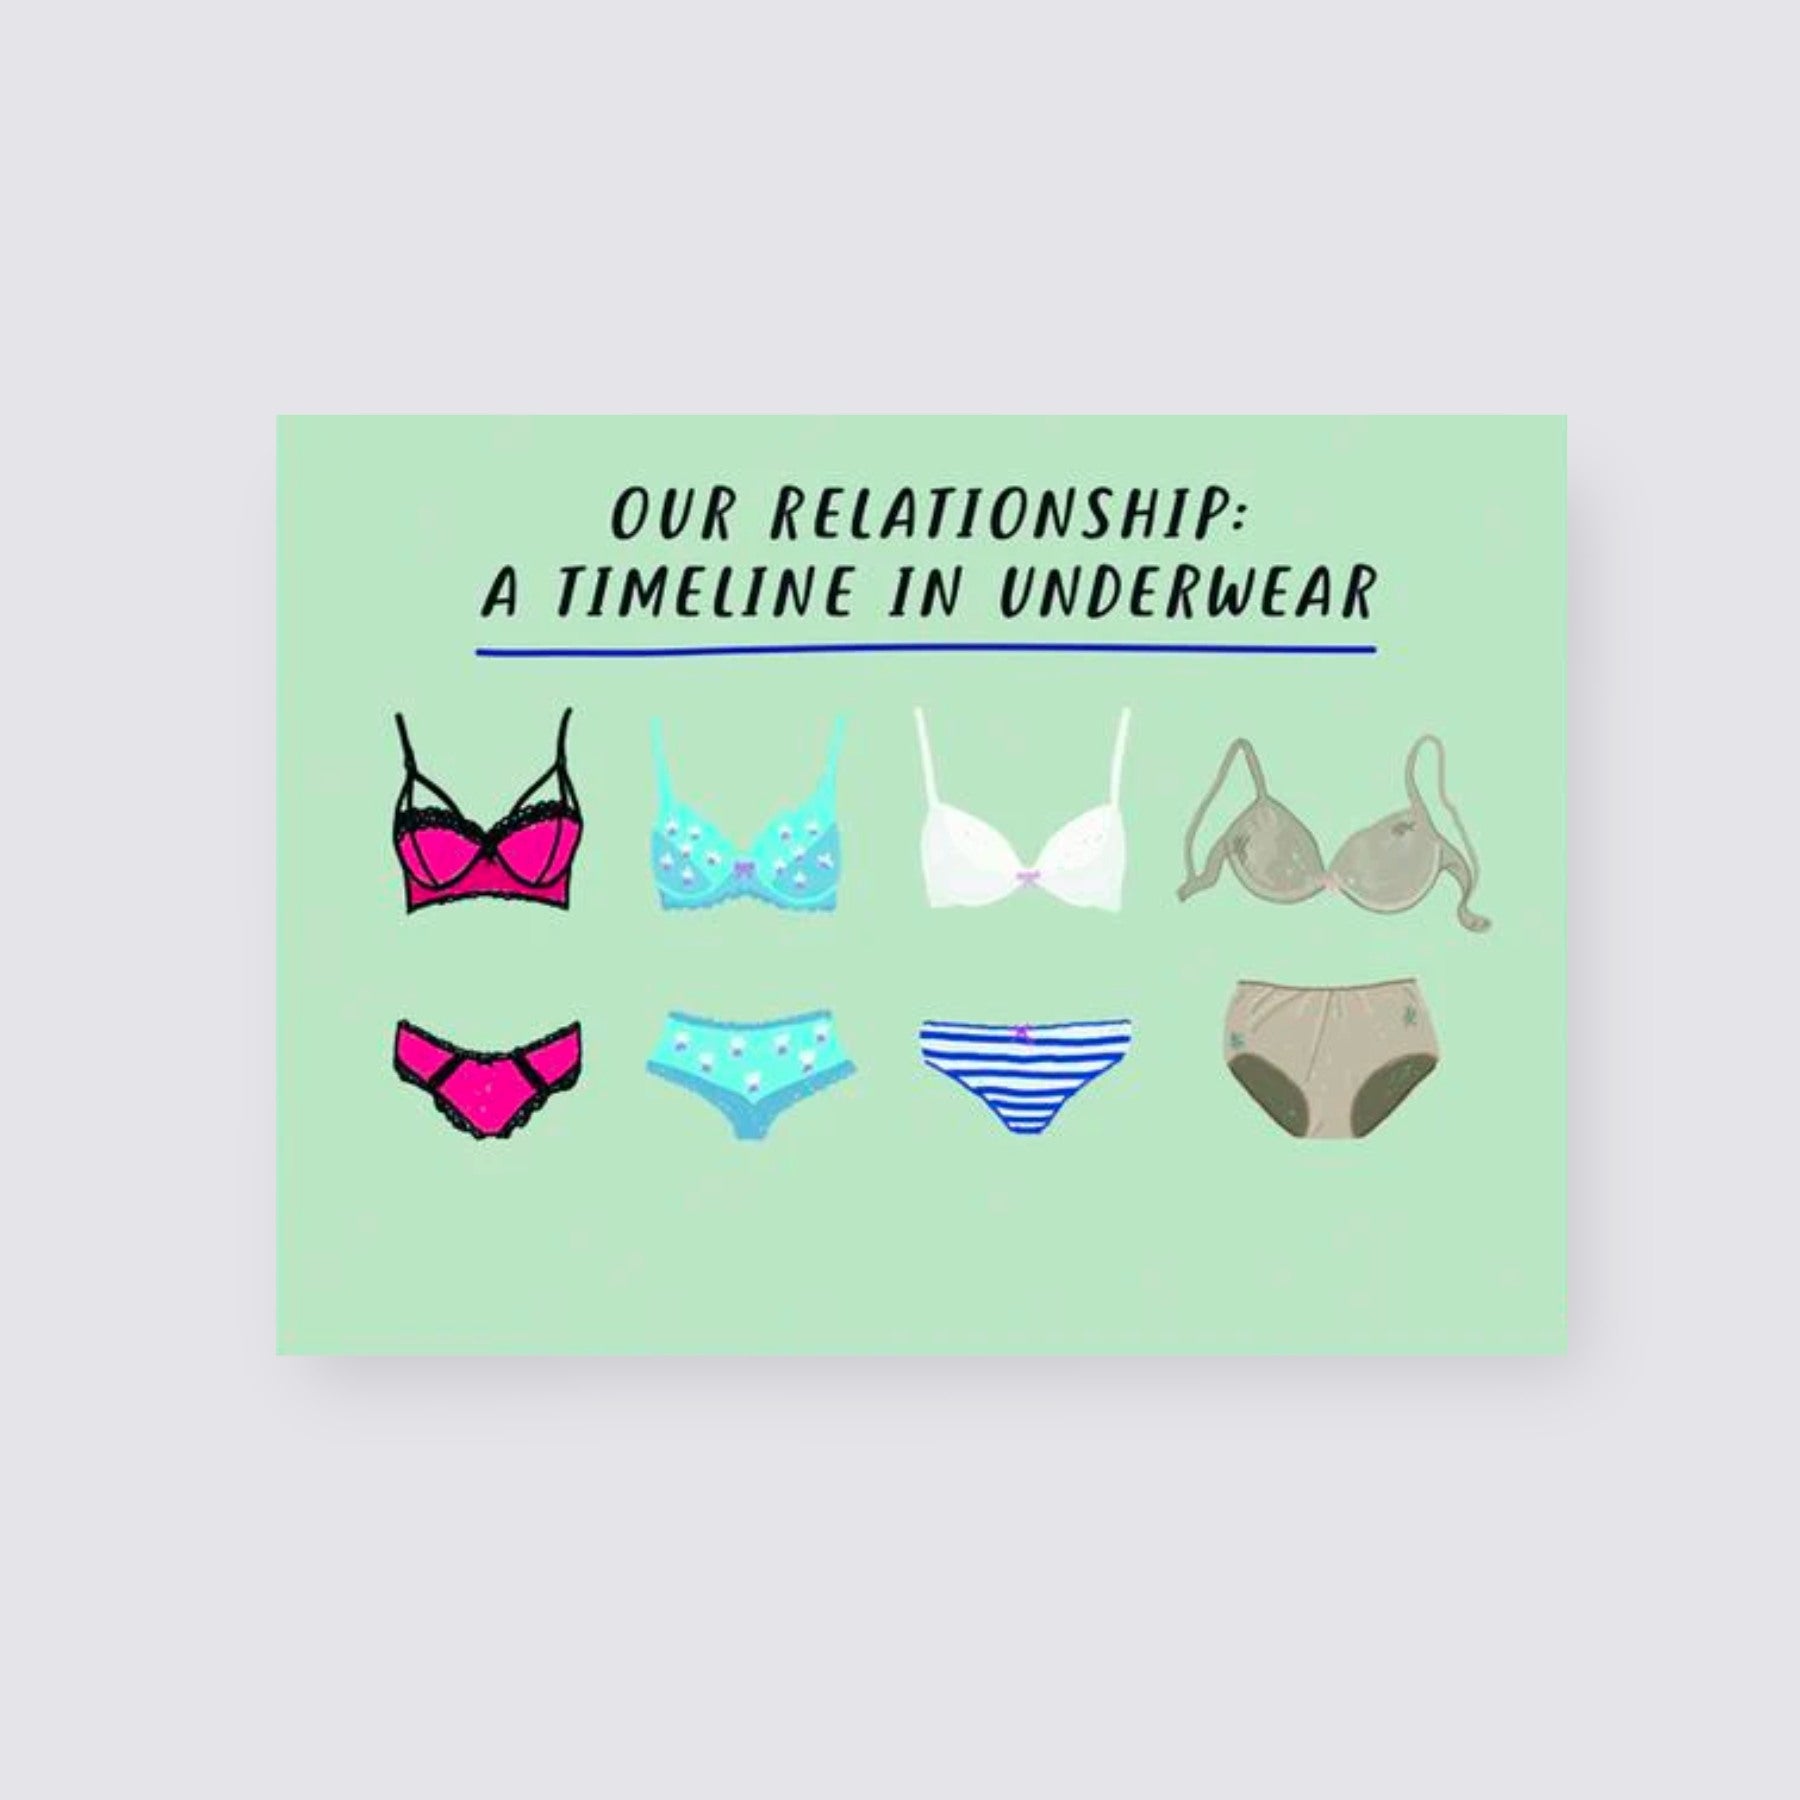 Our Relationship Timeline in Underwear